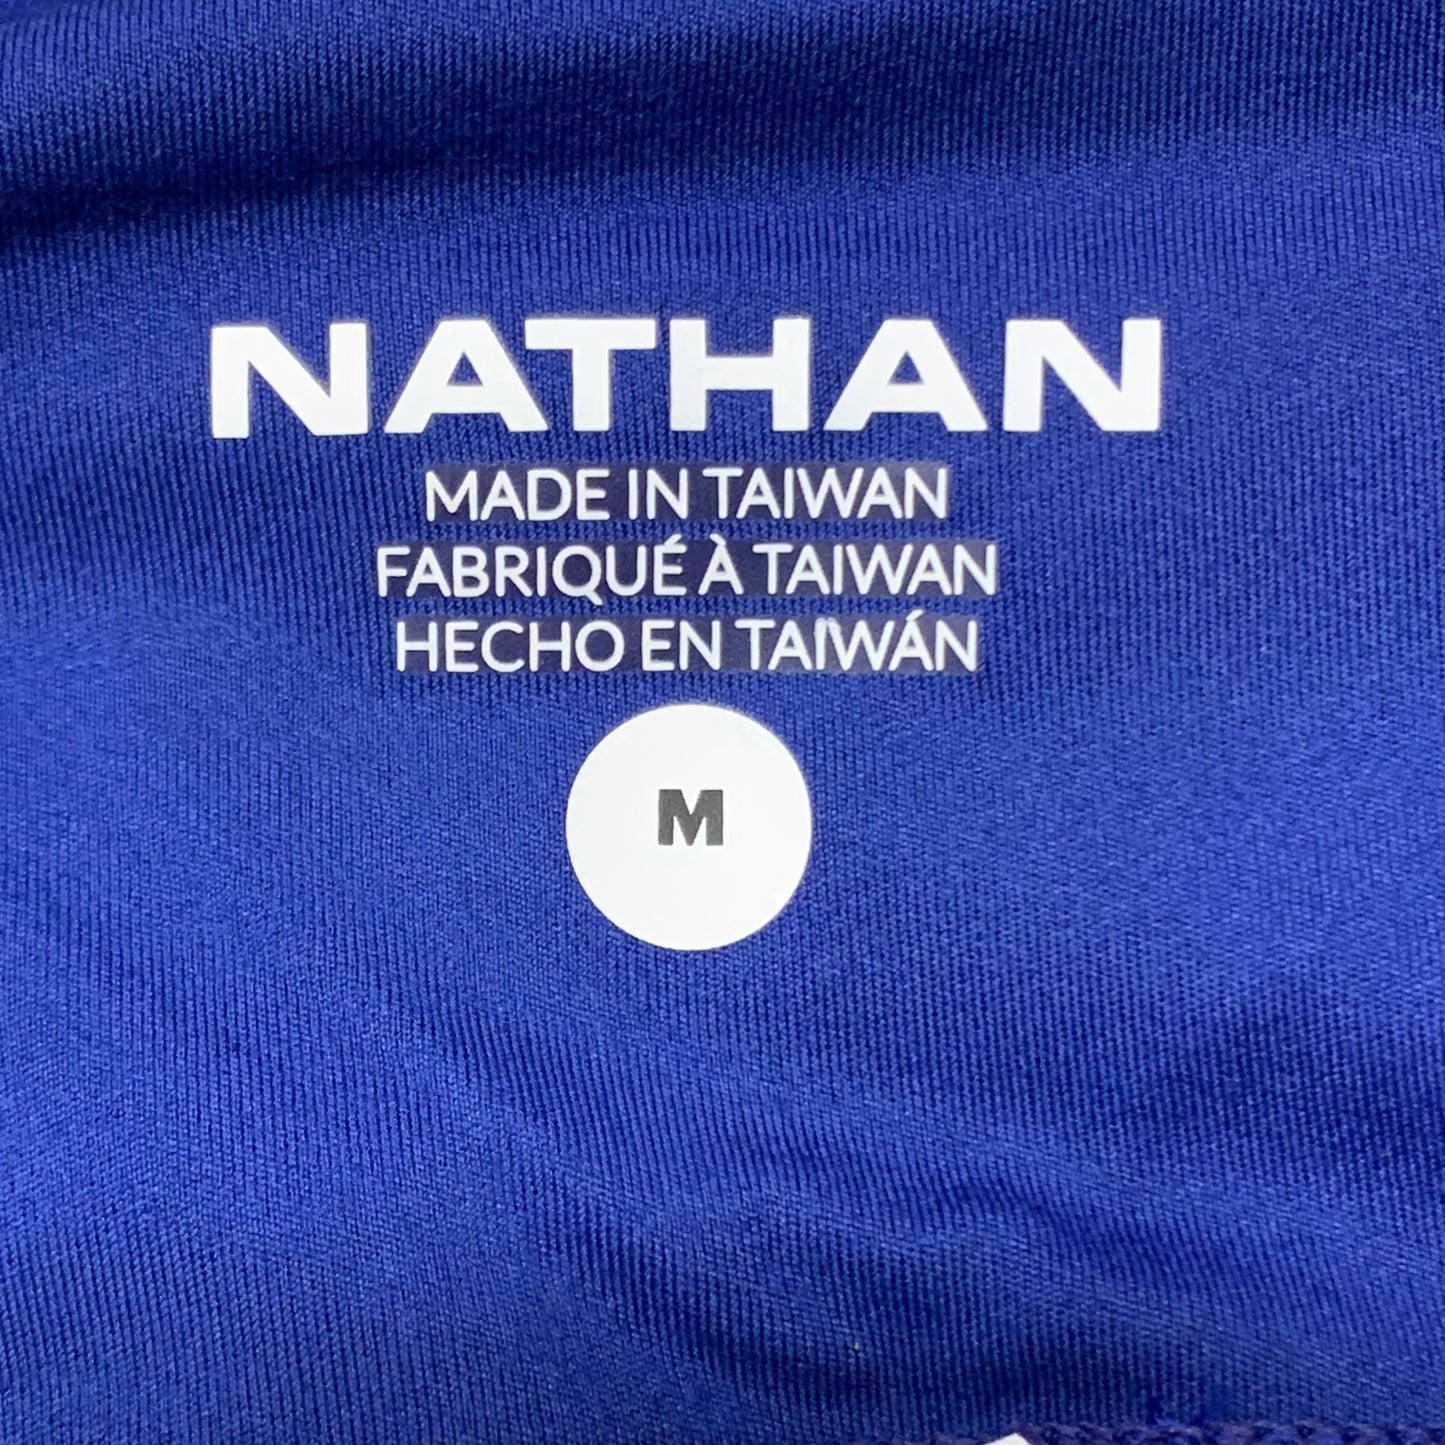 NATHAN Interval 3" Inseam Bike Short Women's Sodalite Blue Sz M NS51040-60247-M